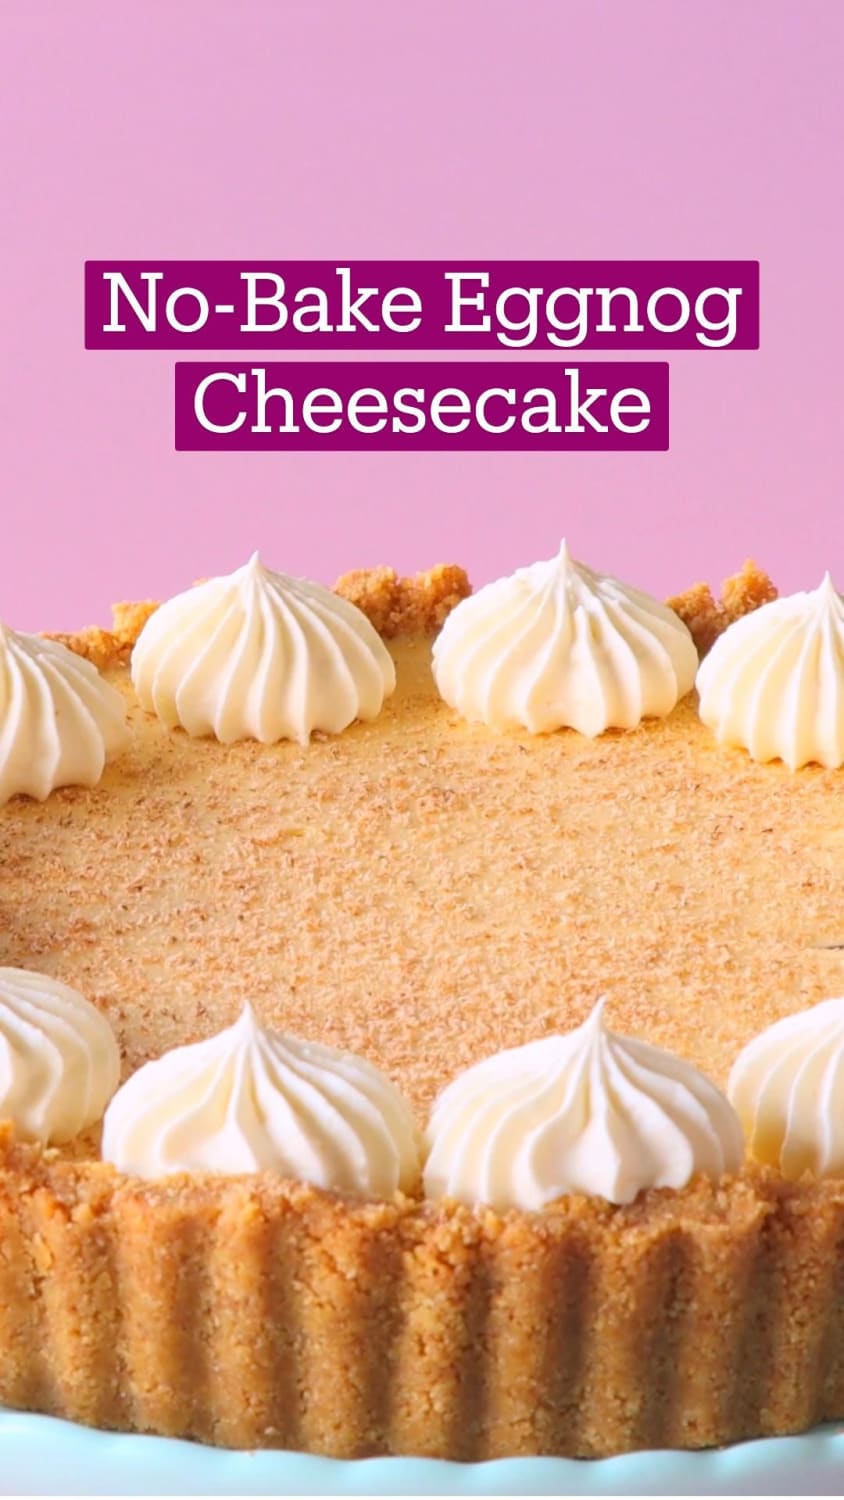 No-Bake Eggnog Cheesecake